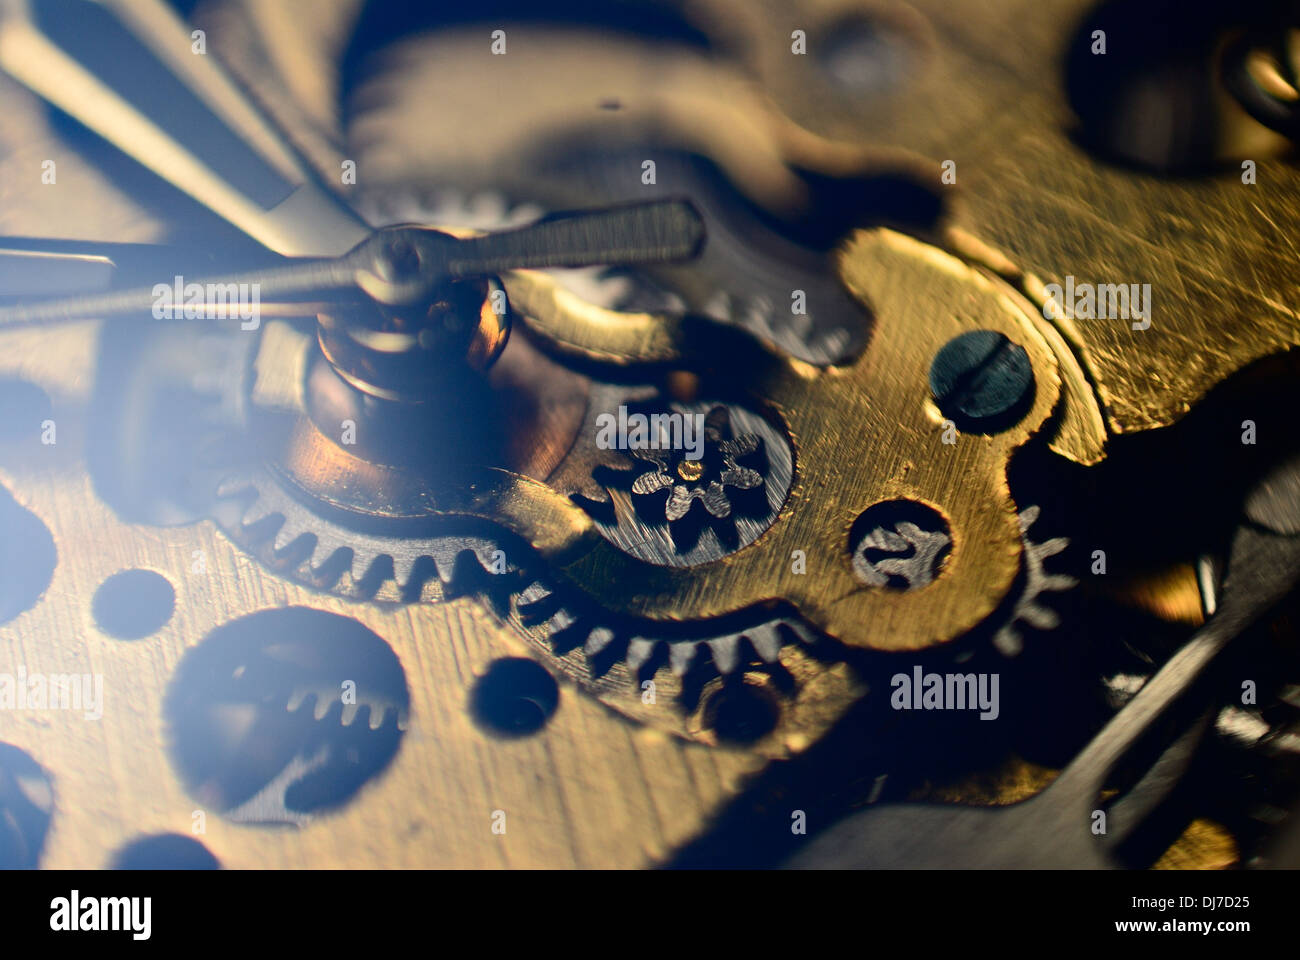 Close-up gears of Wrist watch Stock Photo